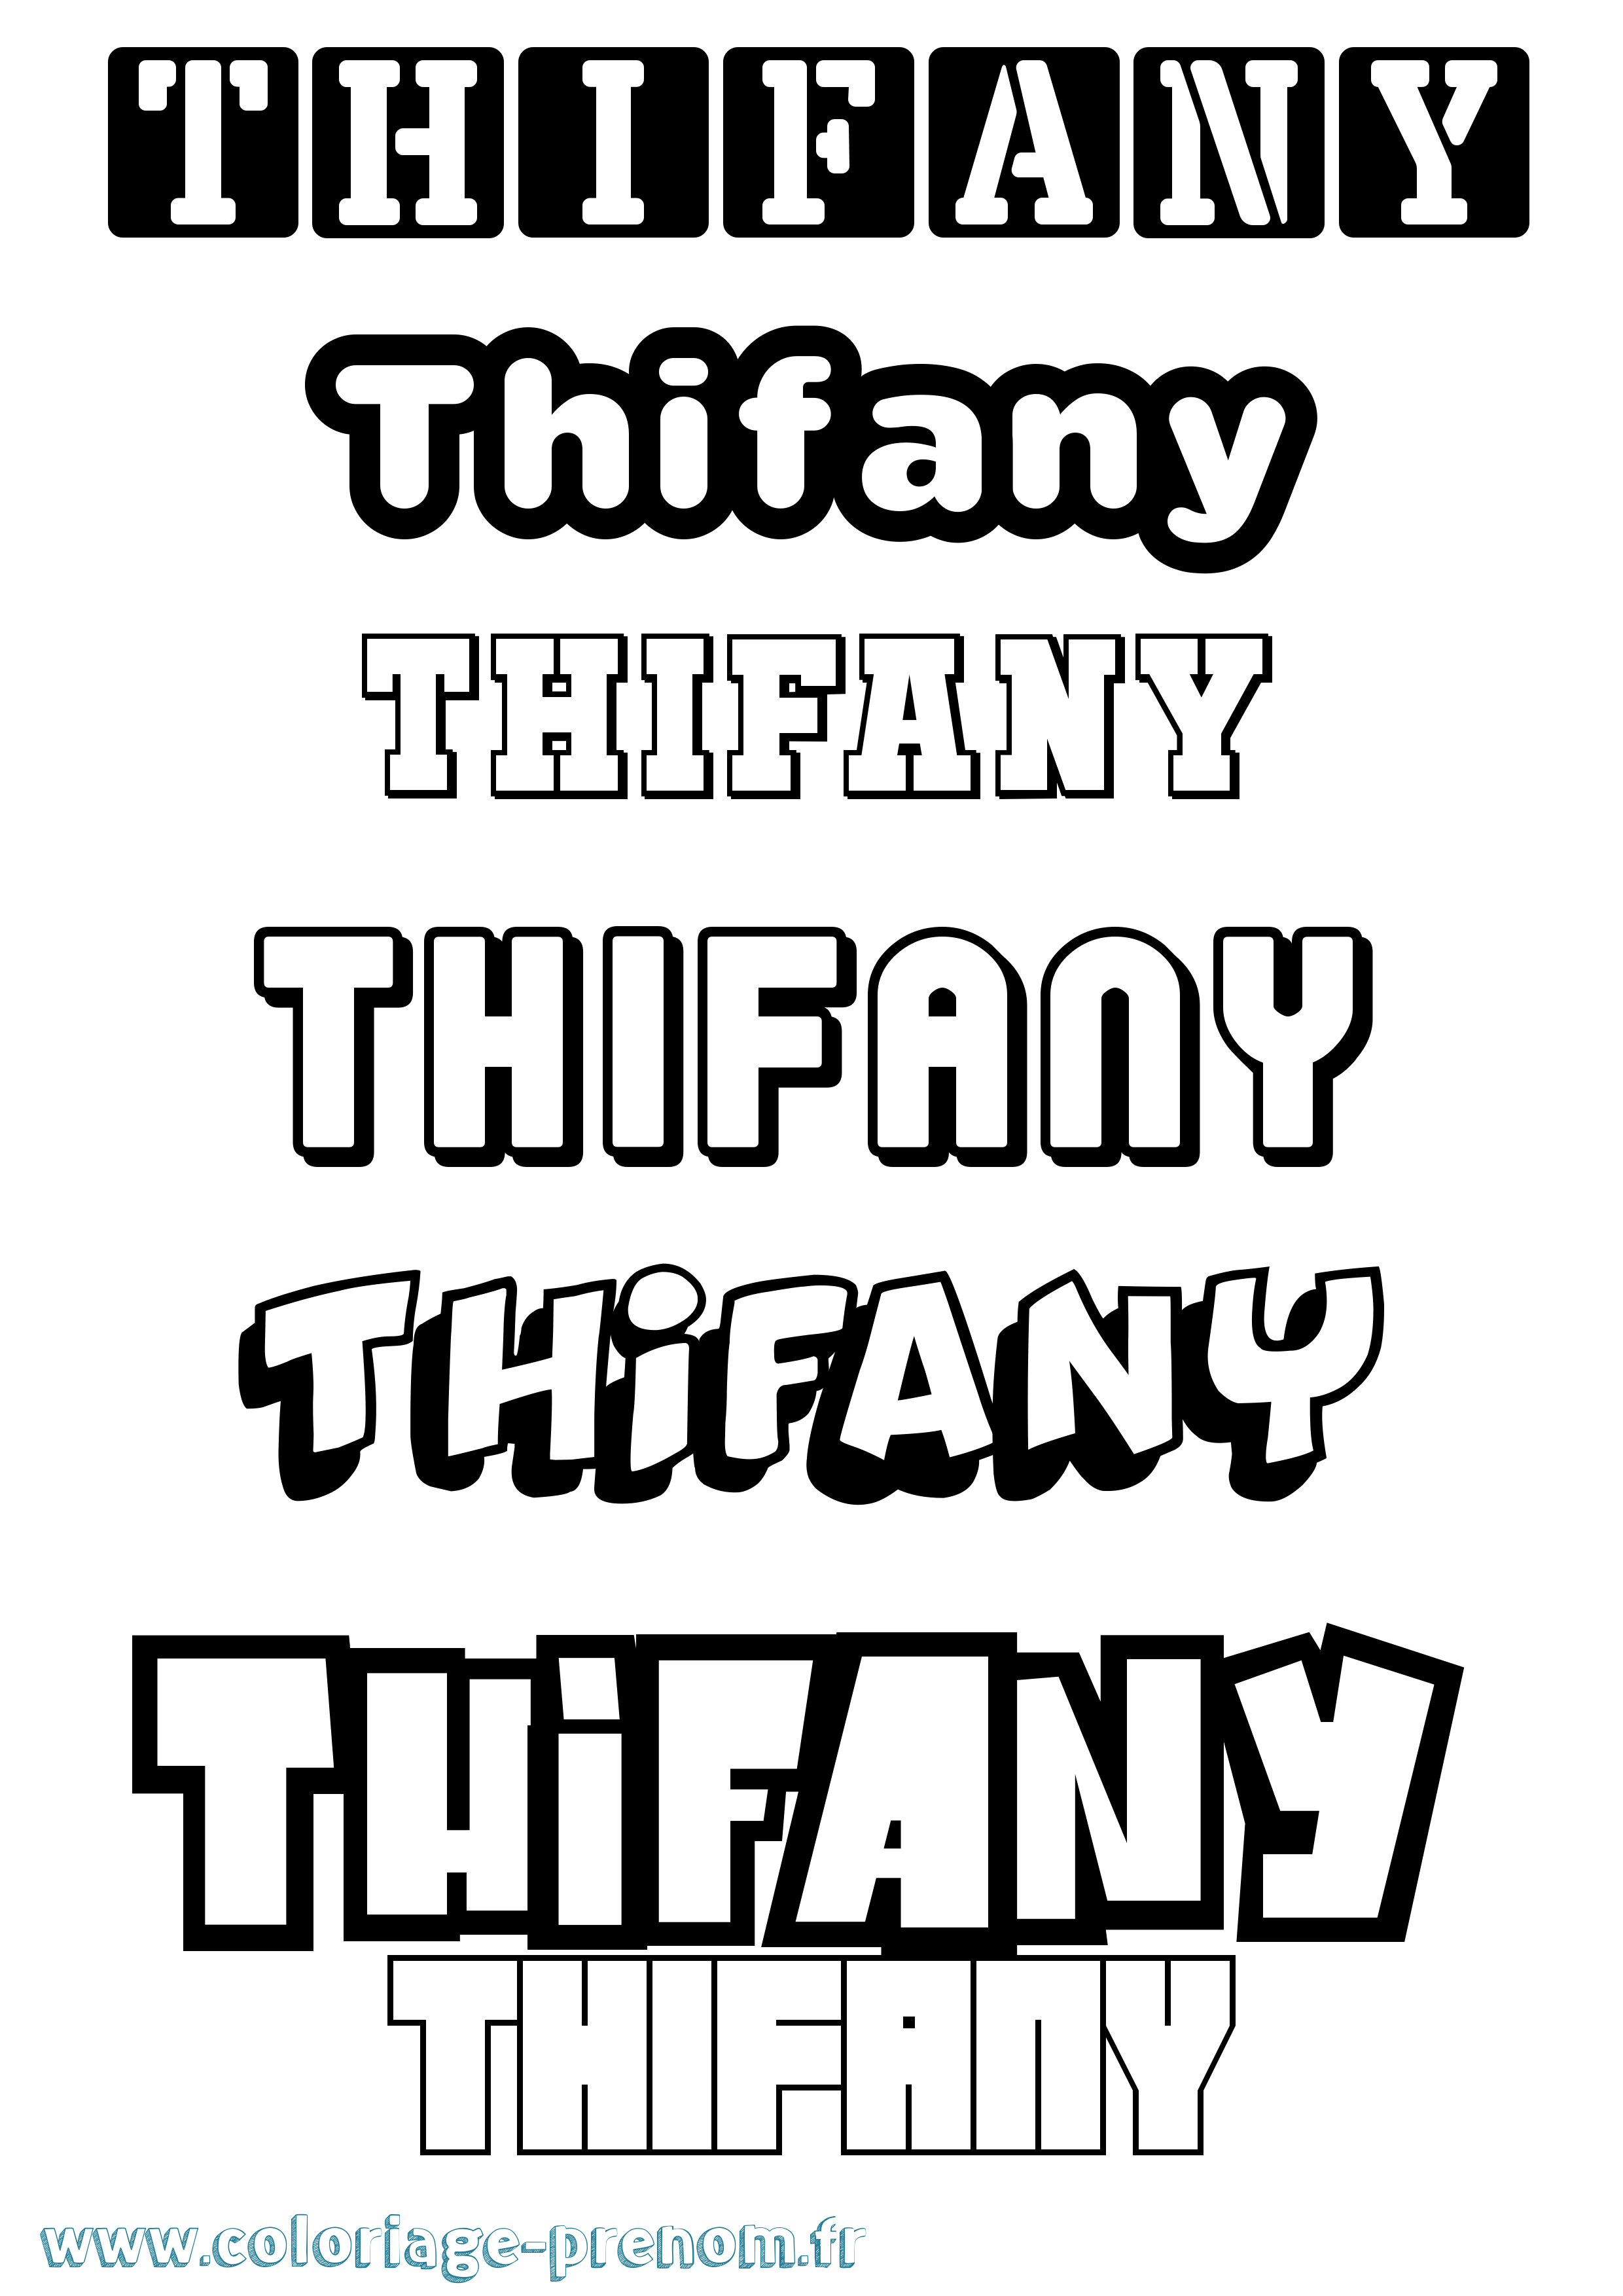 Coloriage prénom Thifany Simple